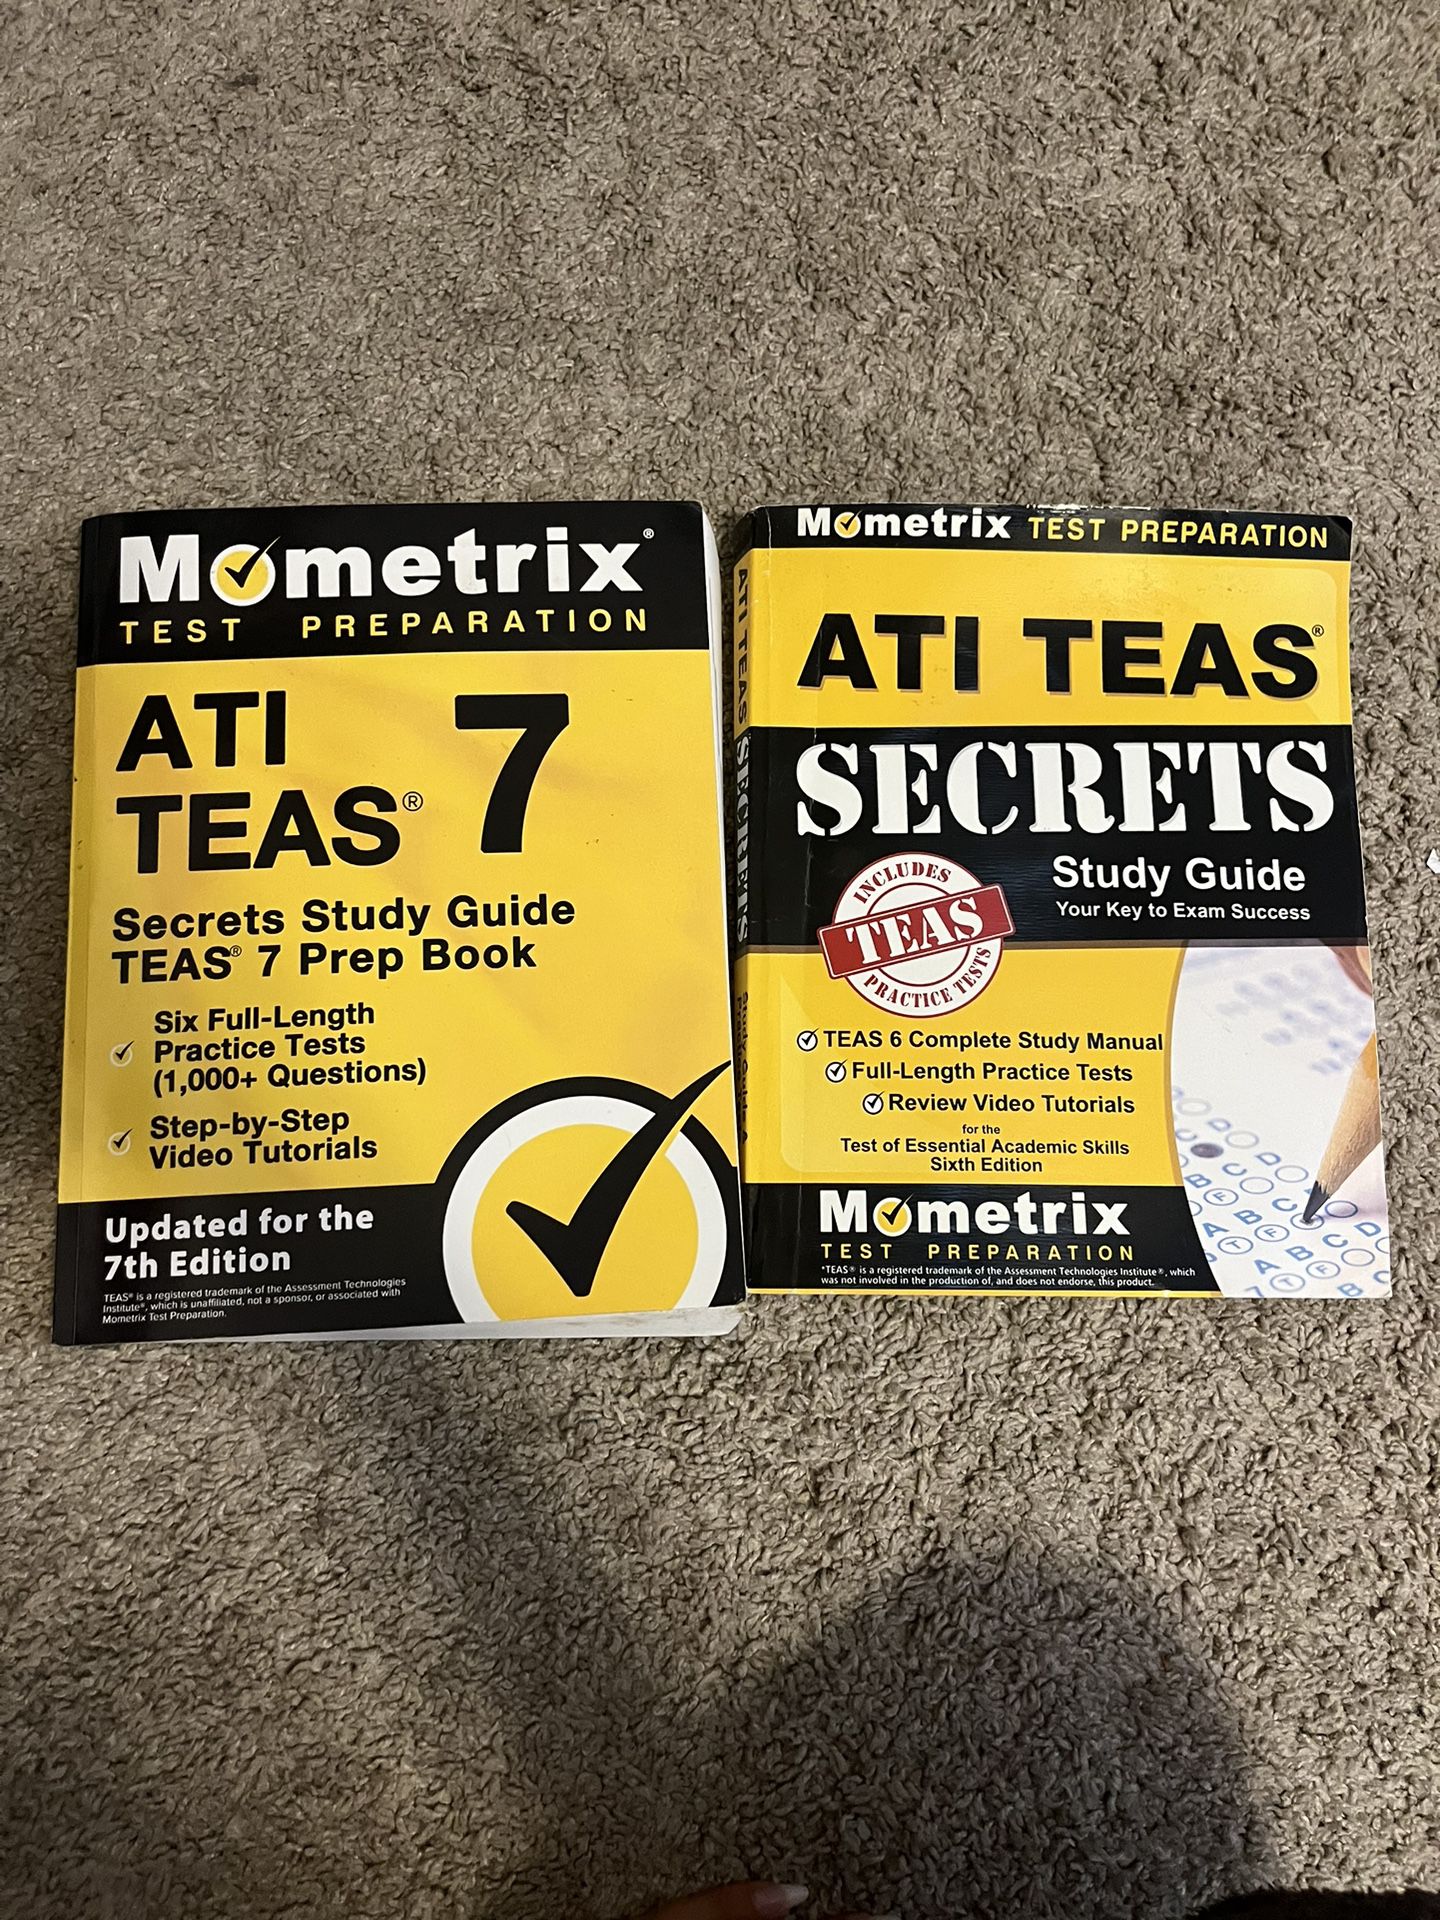 ATI TEAS MOMETRIX STUDY GUIDE PREP BOOK